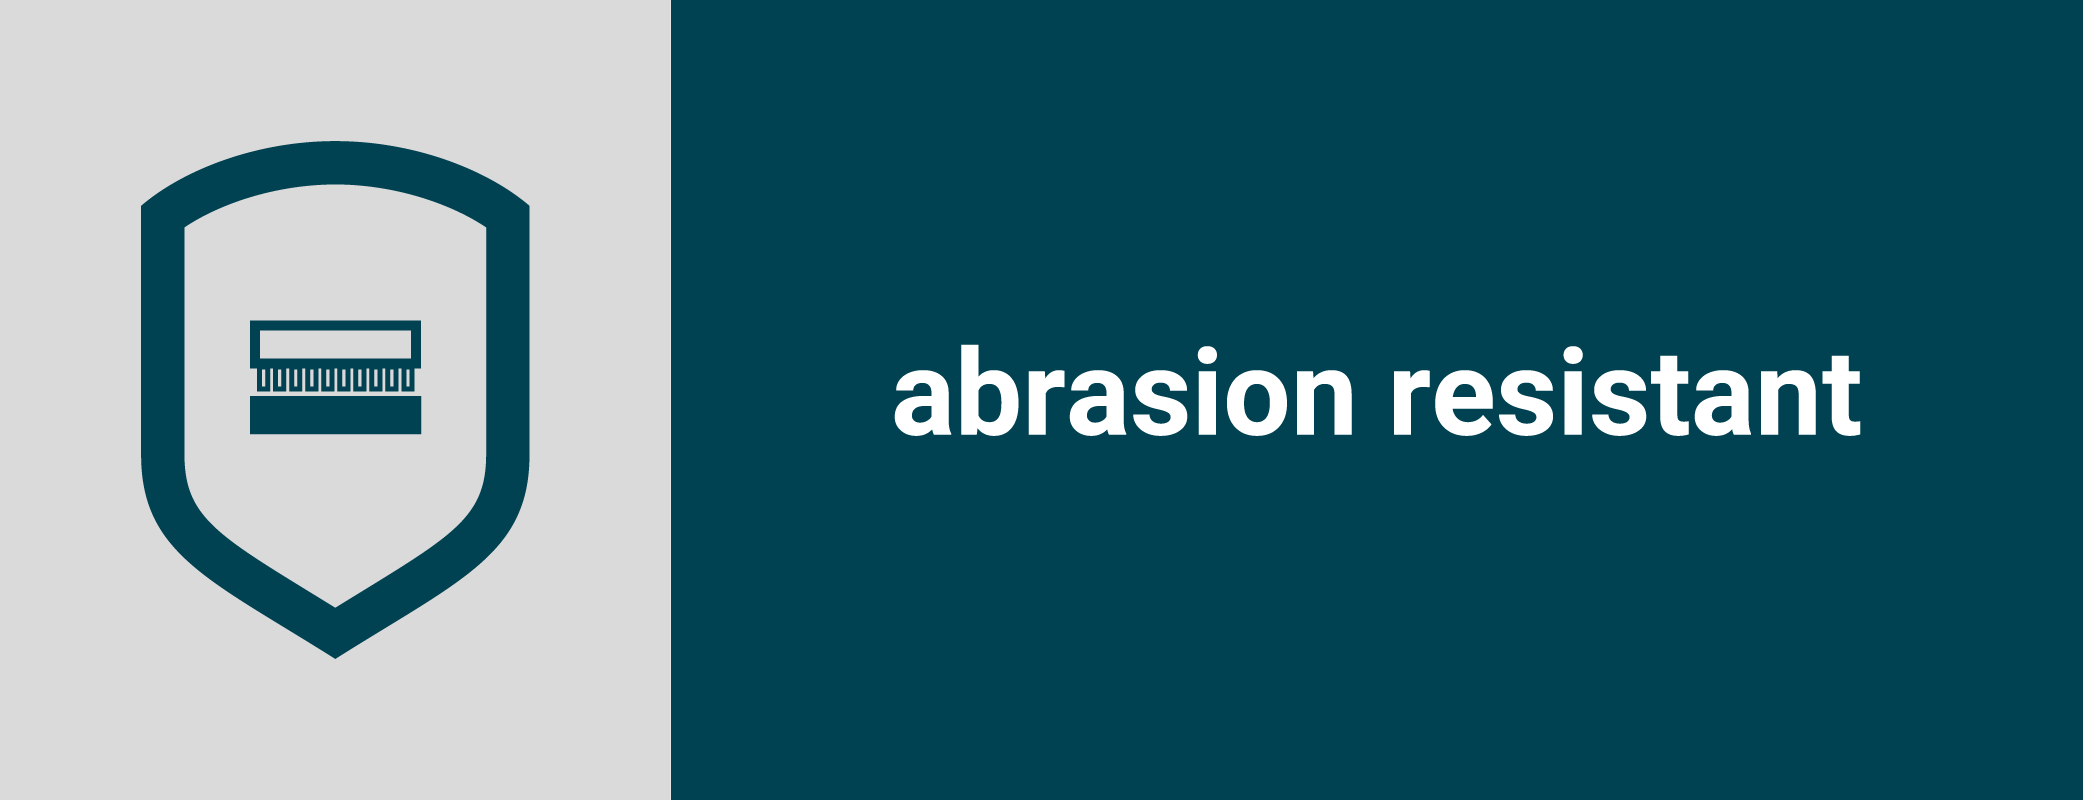 abrasion resistant